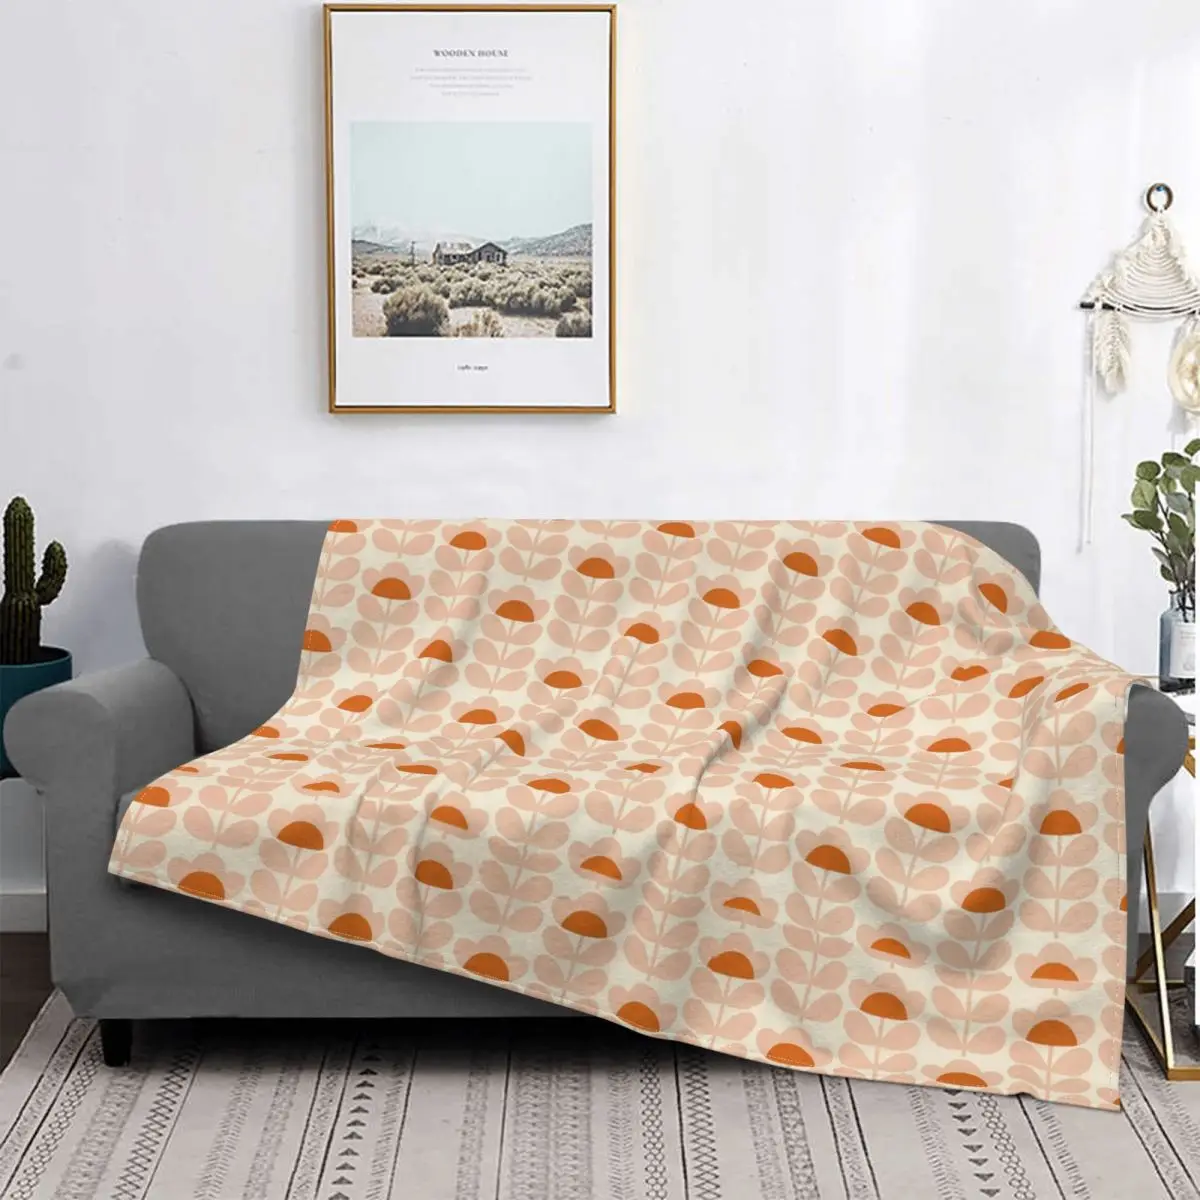 

Orla Kiely-mantas de franela de hojas de colores, manta ligera portátil para cama, colcha fina de felpa de viaje